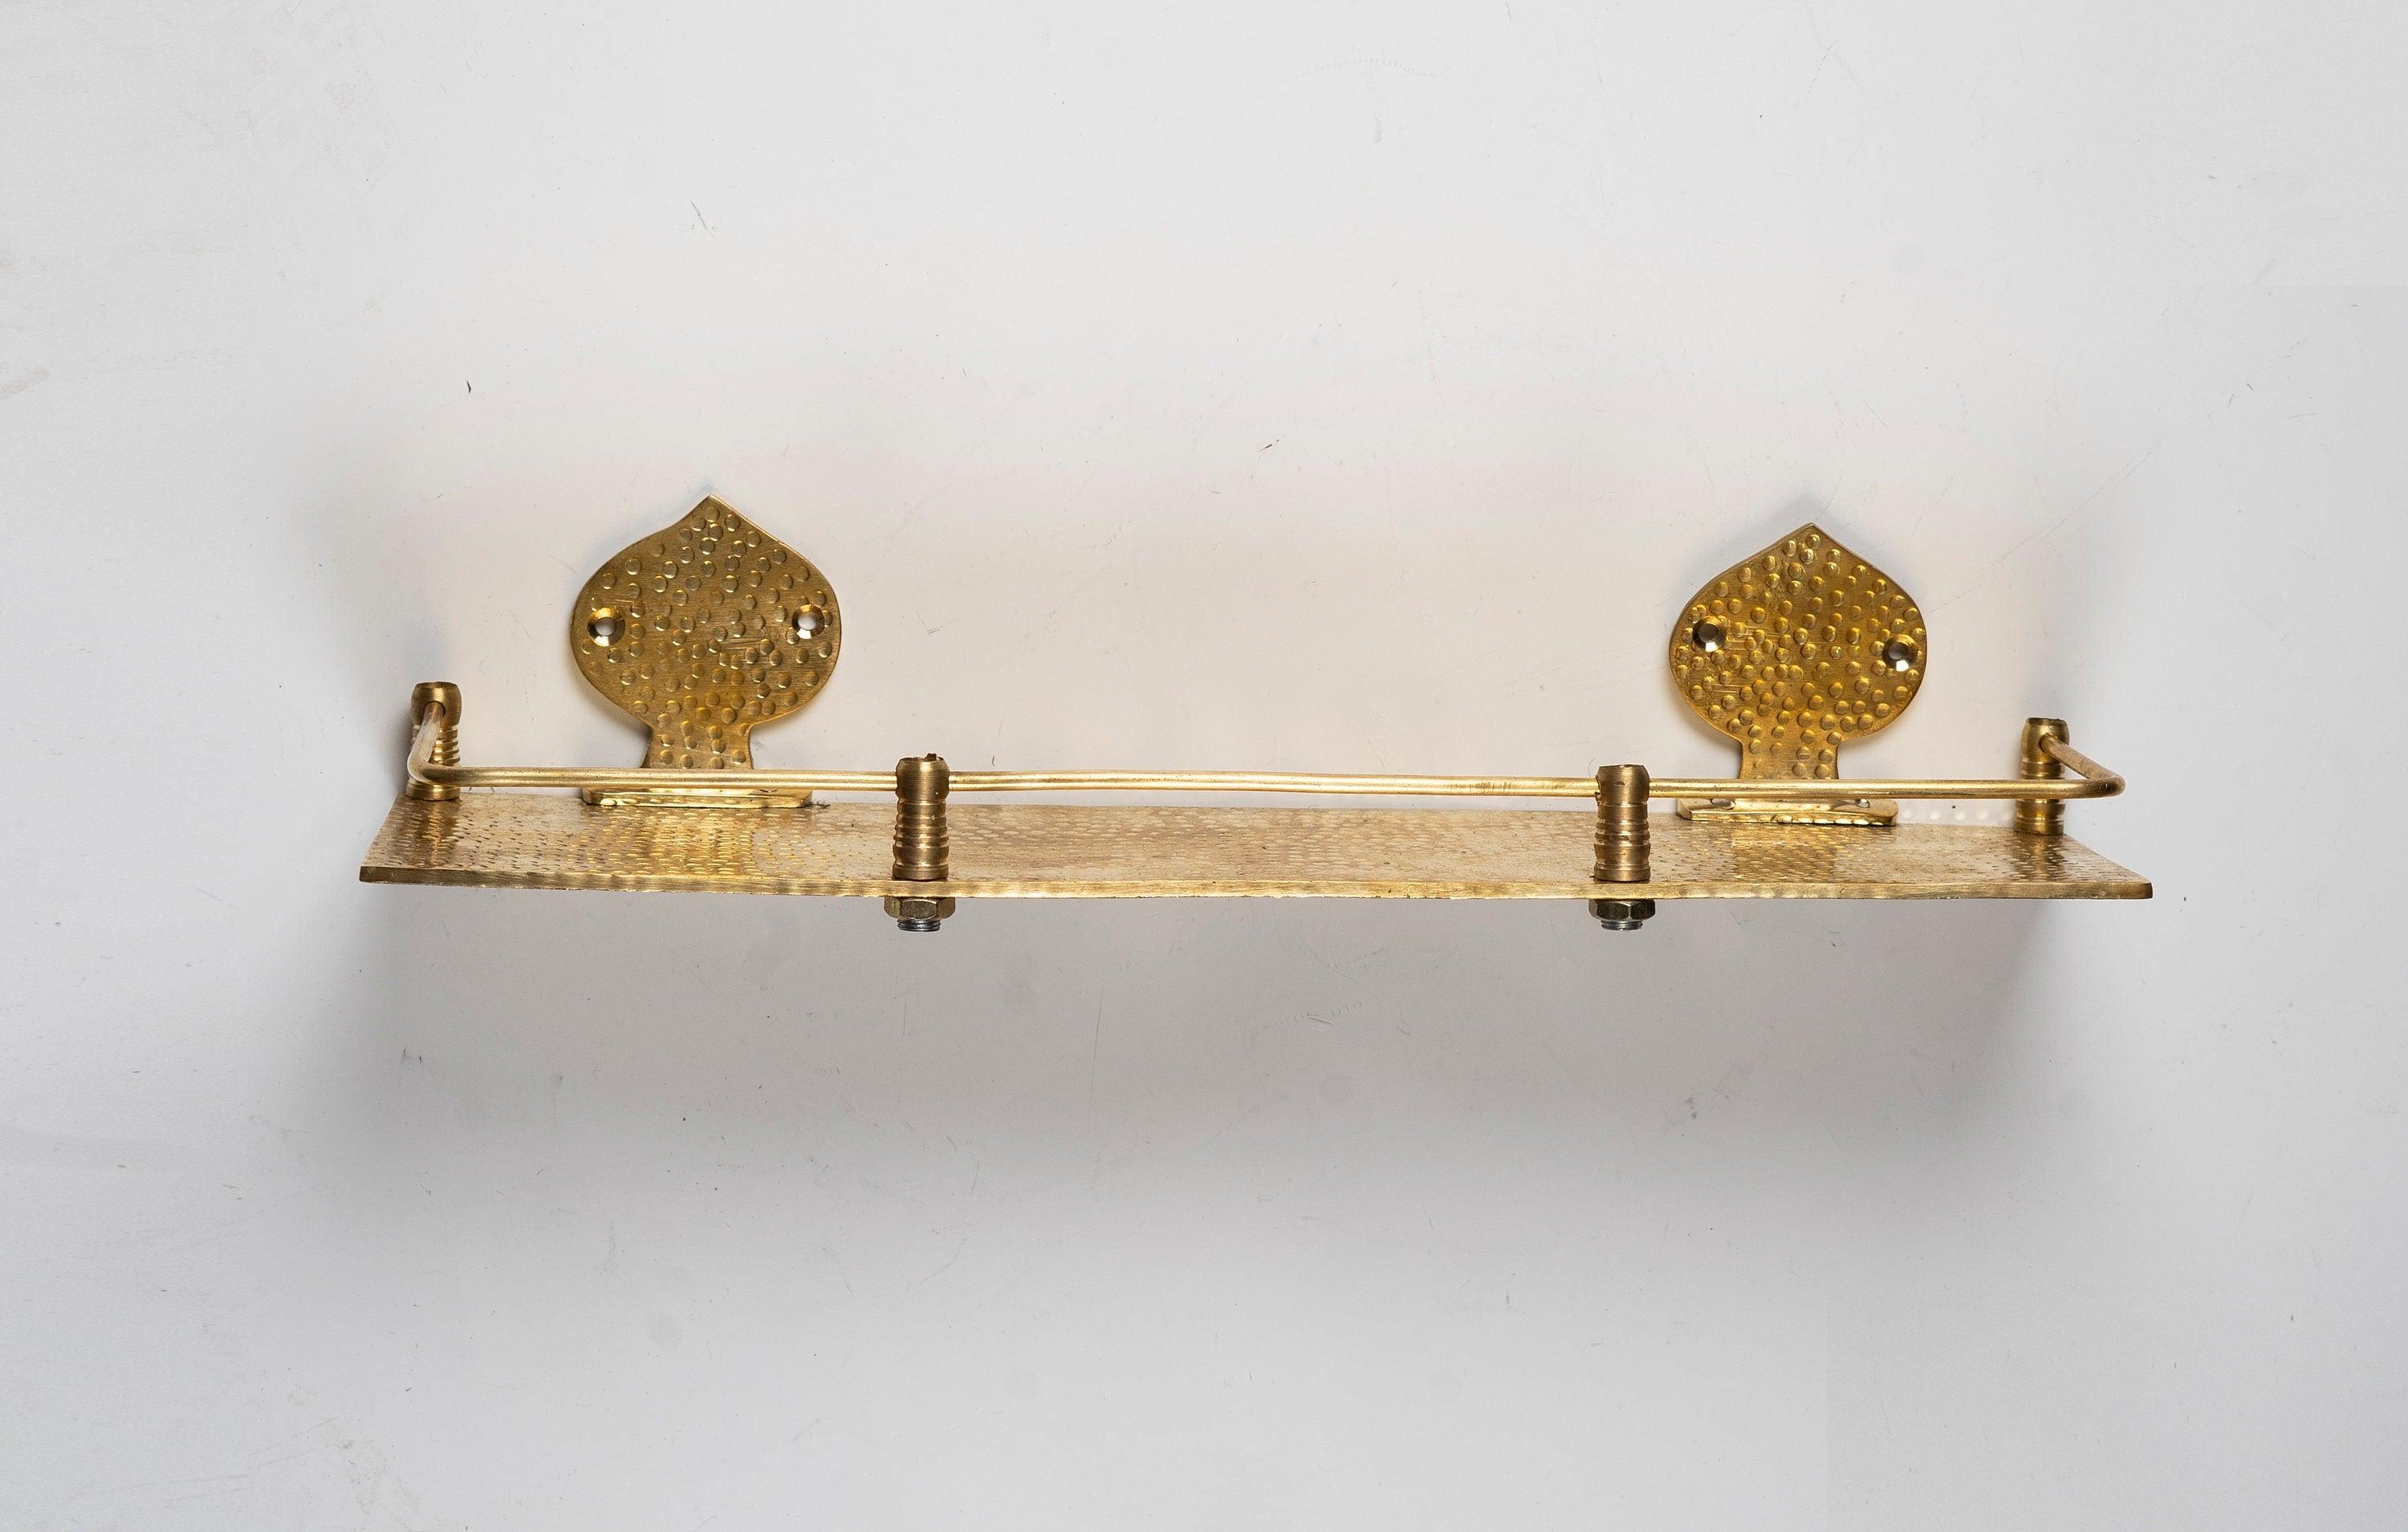 Handmade Solid Brass Hammered Floating Wall Shelf